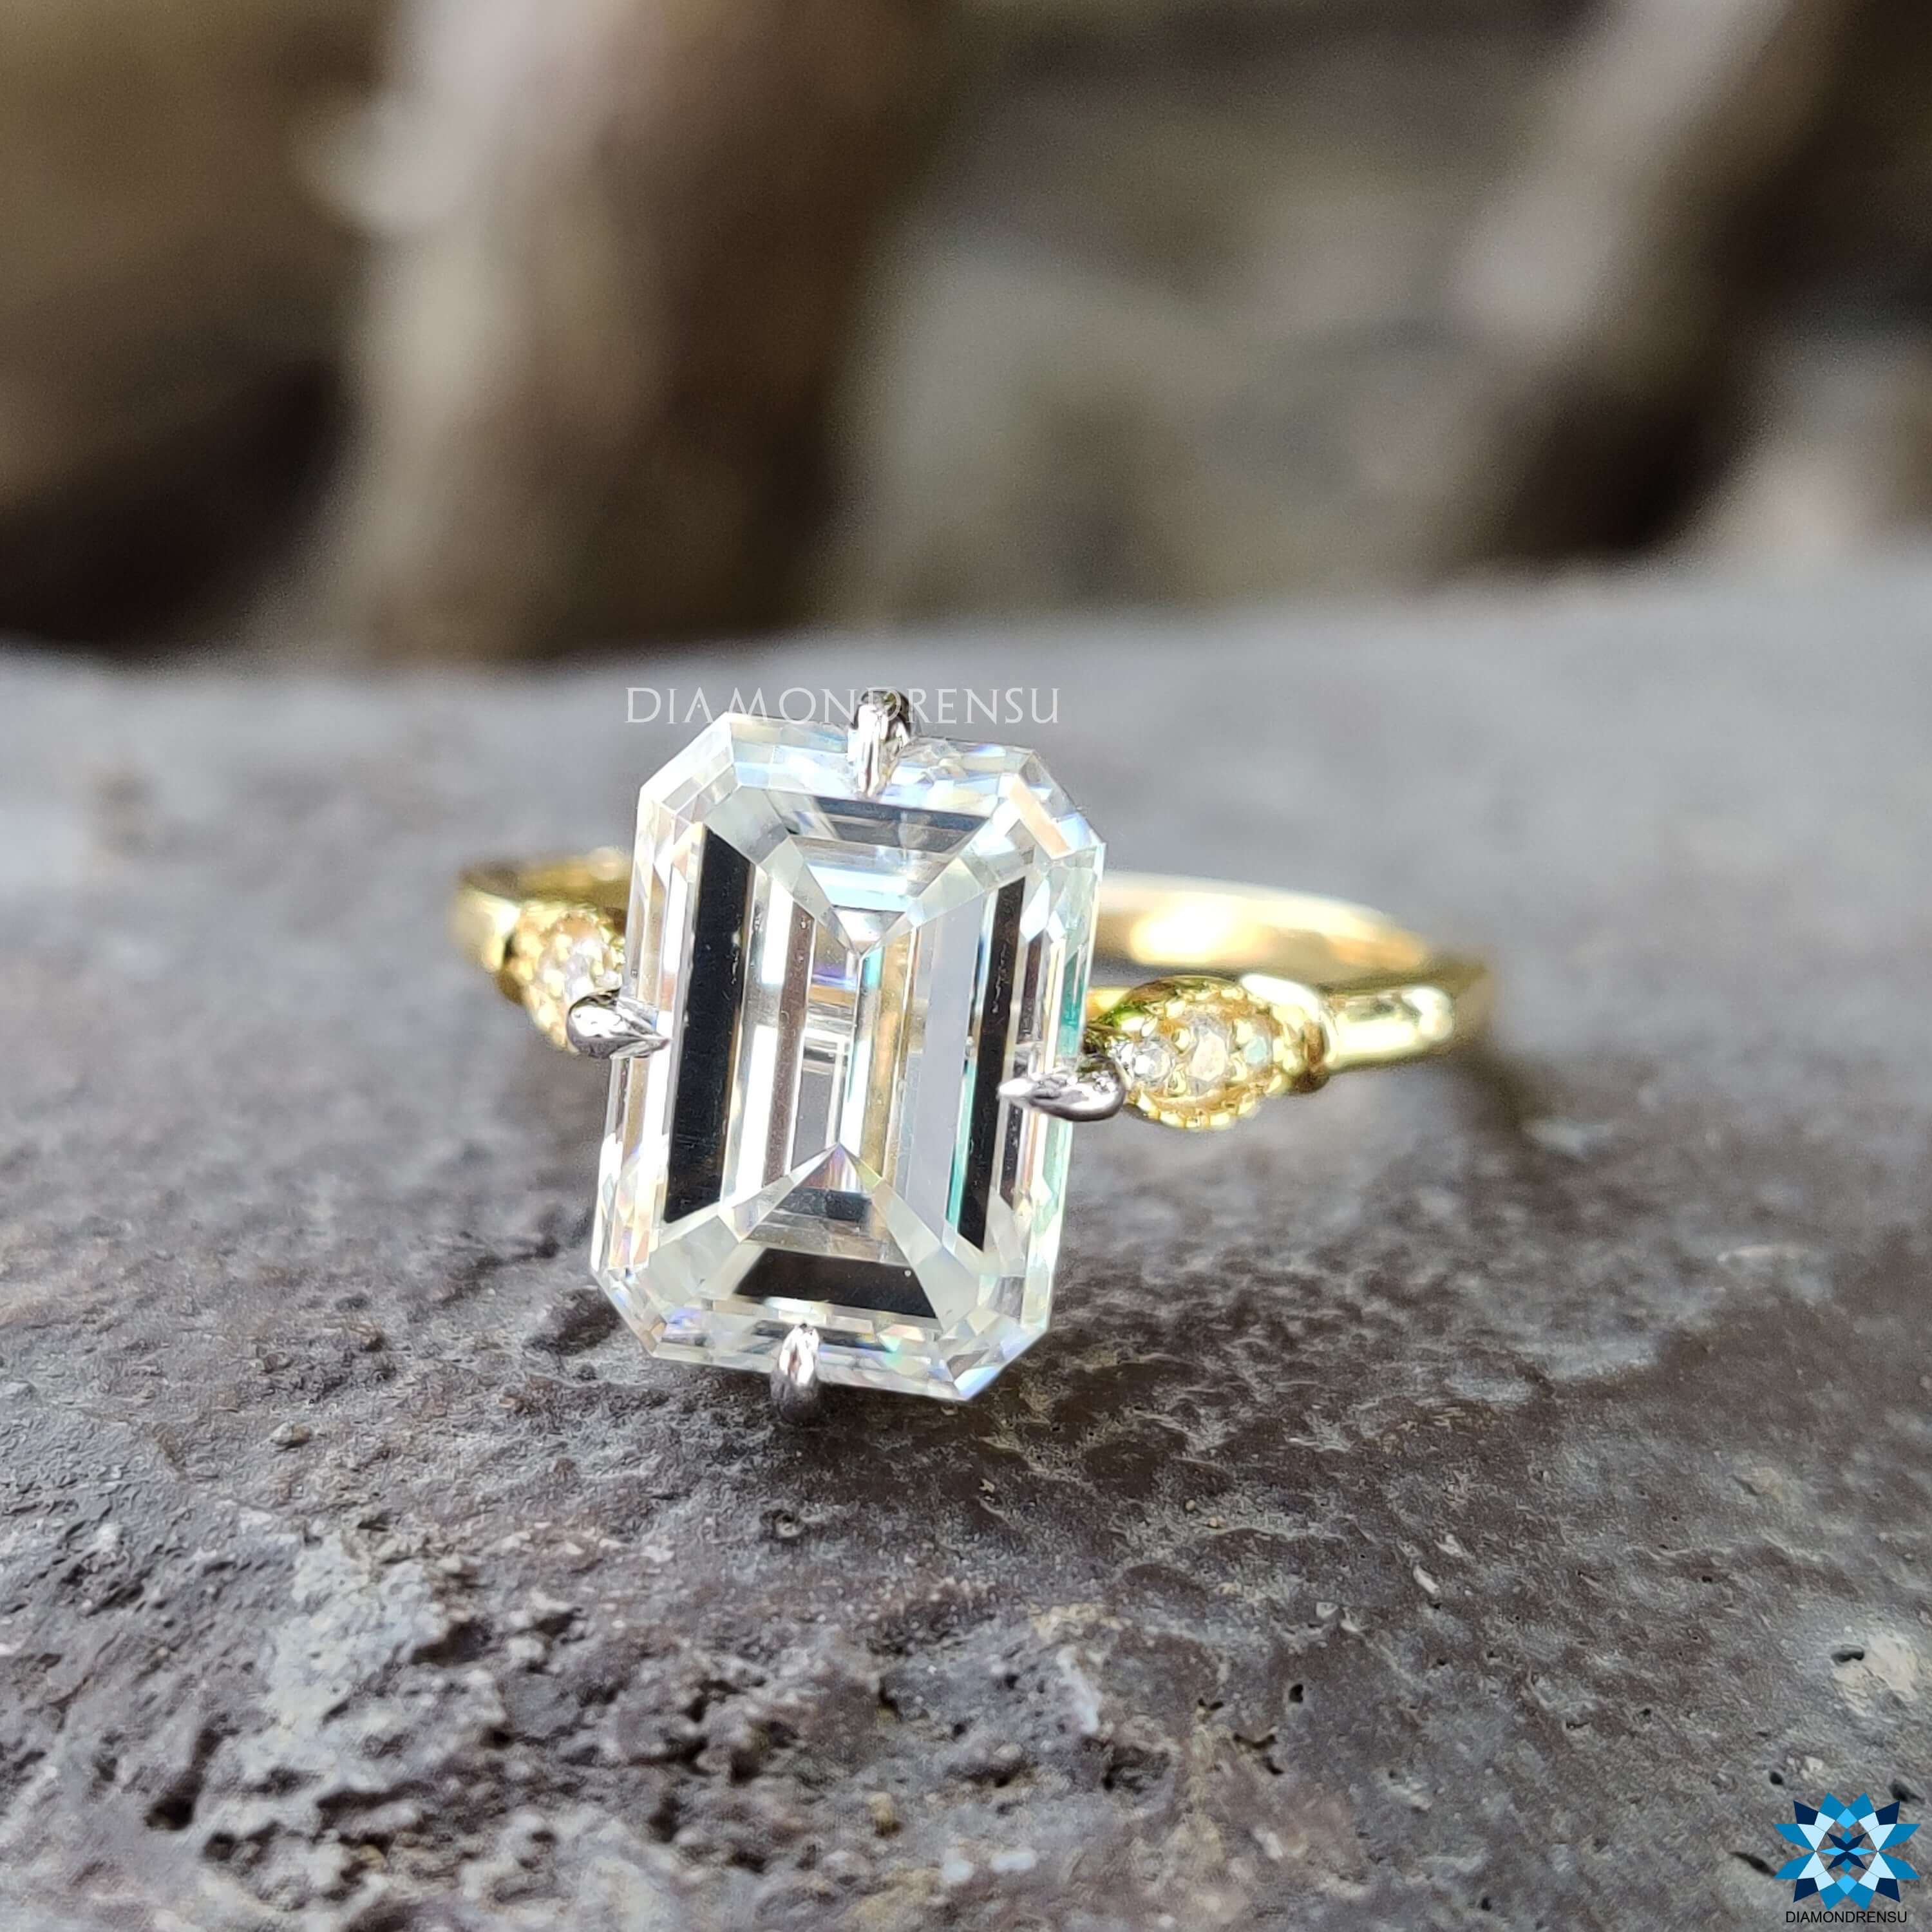 1,454 Antique Diamond Rings For Sale - SellingAntiques.co.uk